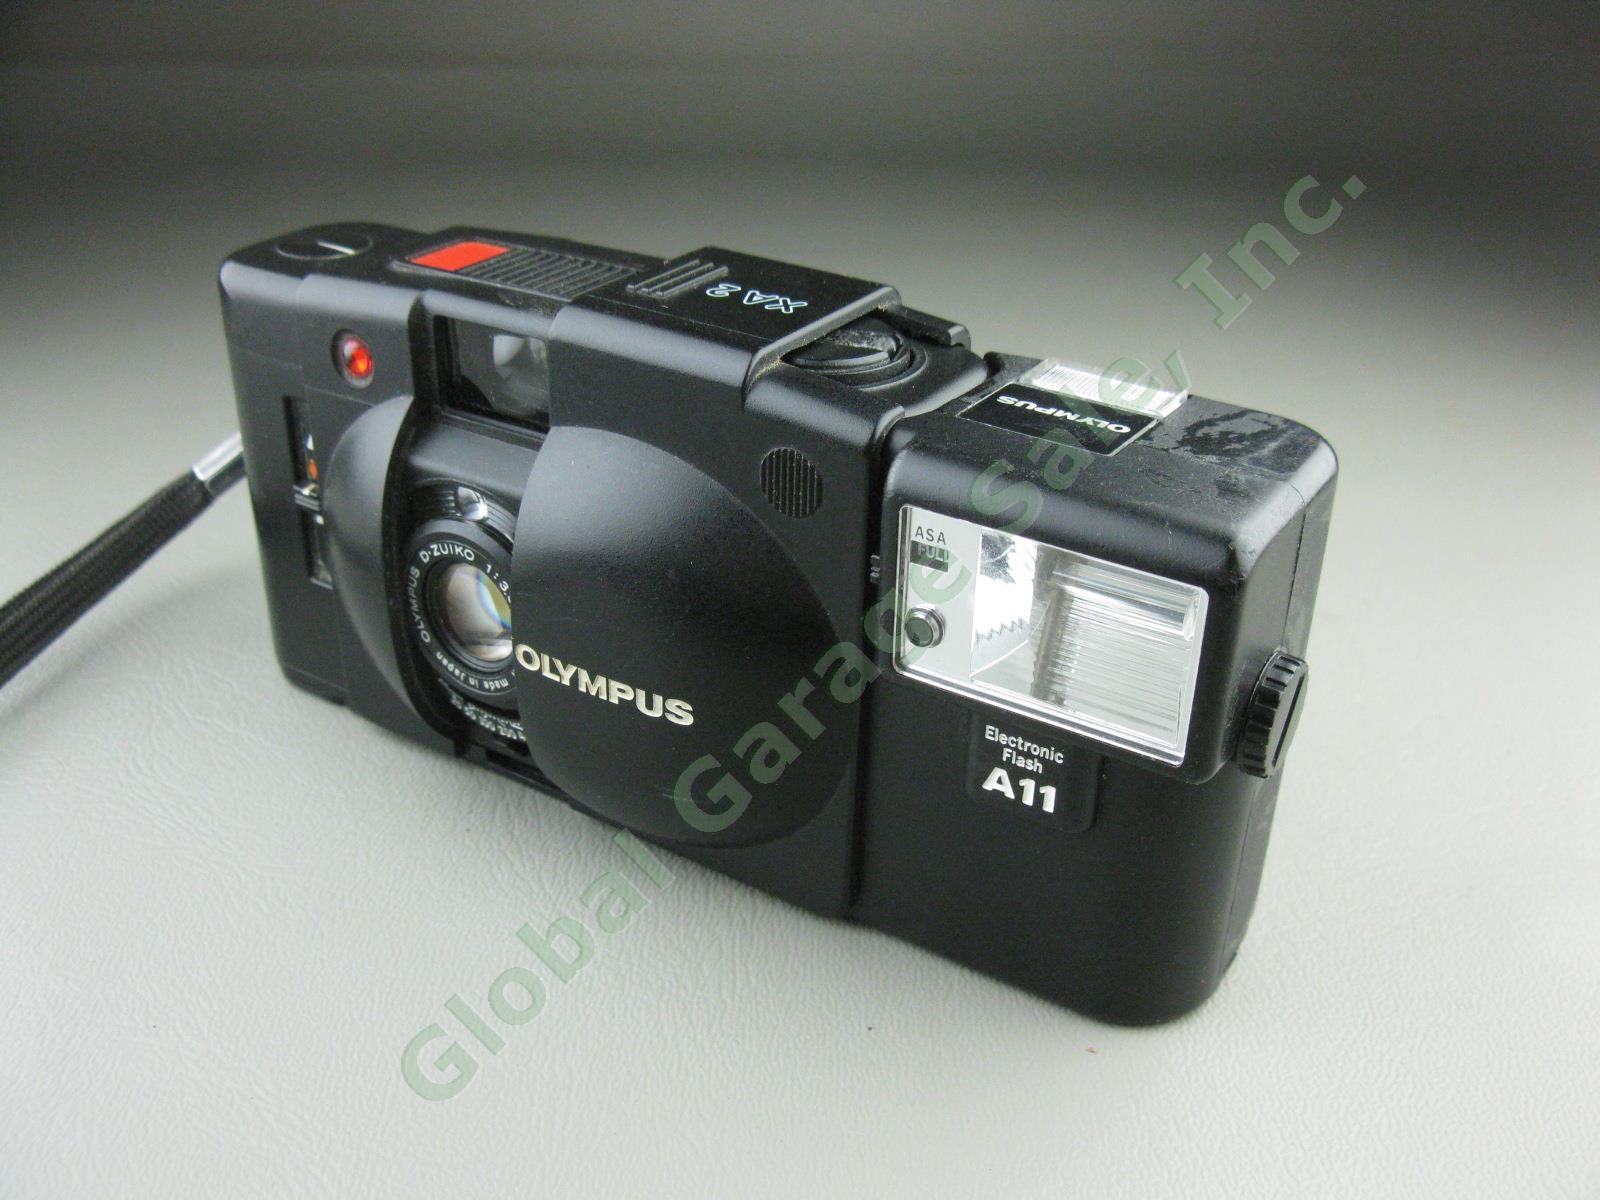 Vtg Olympus XA2 Rangefinder 35mm Film Camera + A11 Flash Bundle Lot Tested Works 2